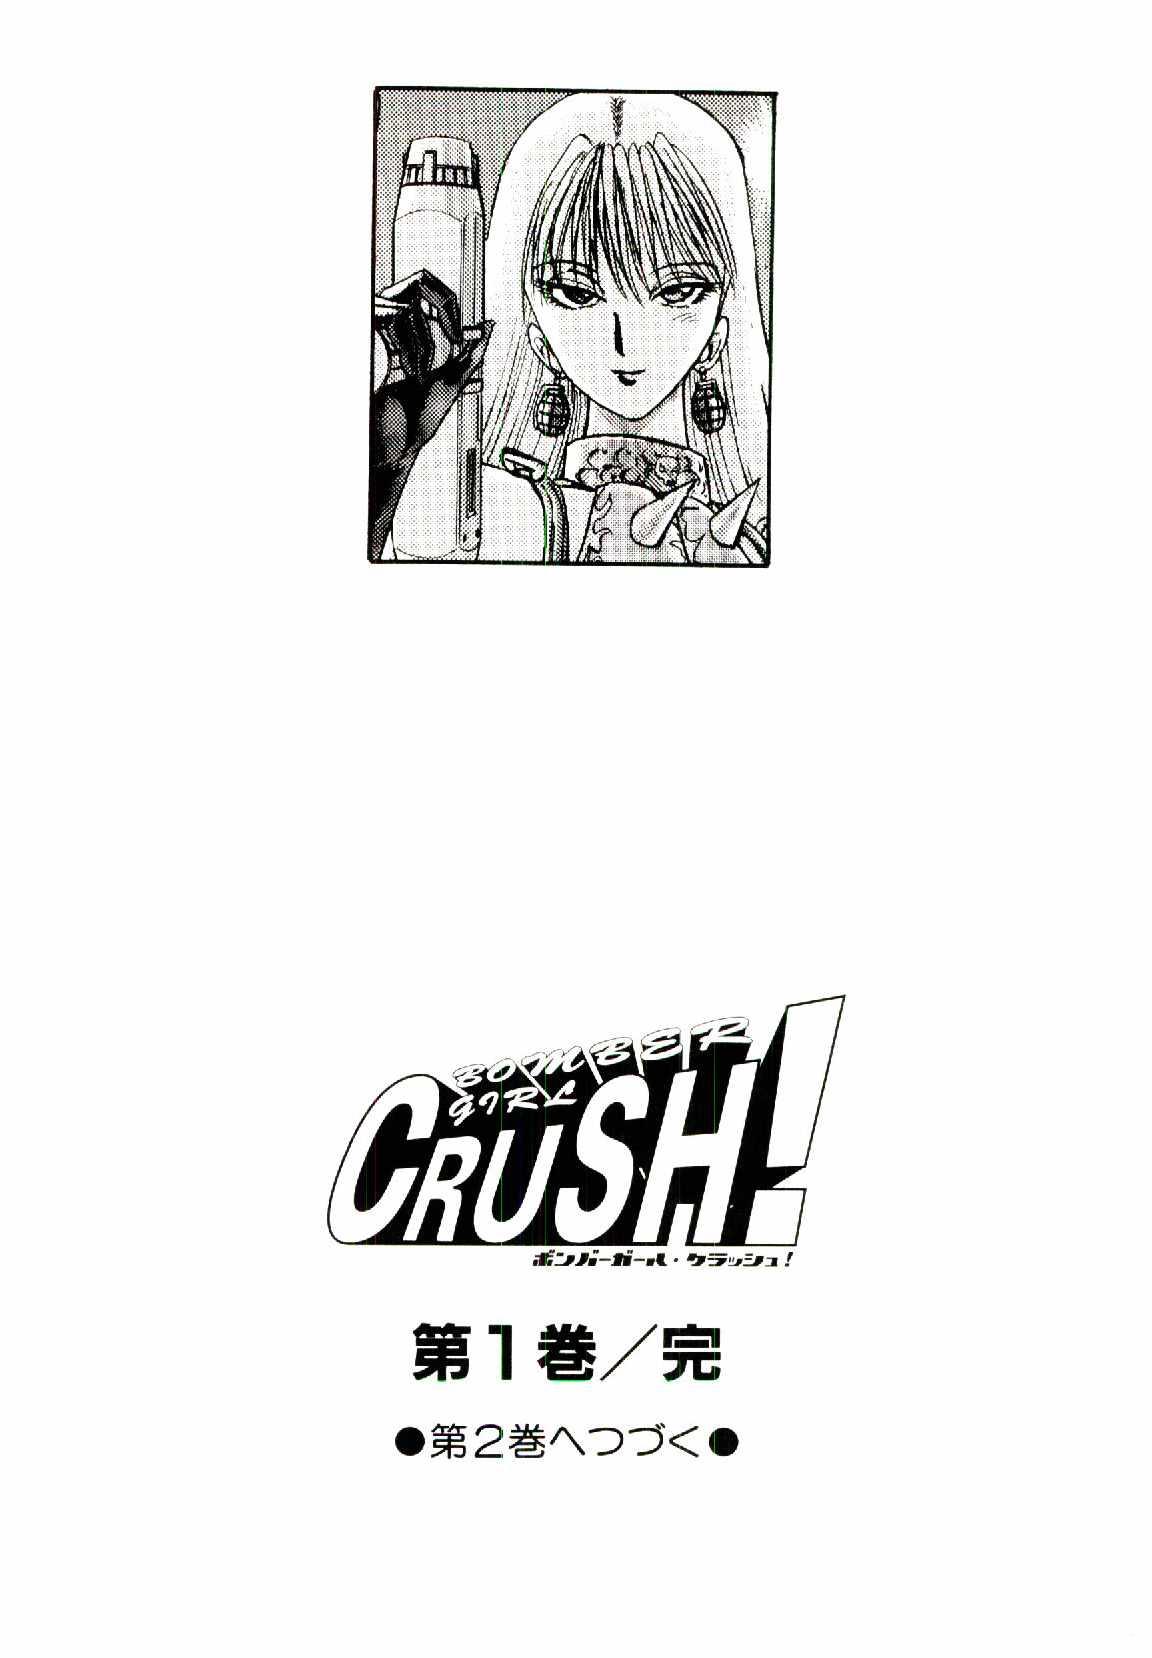 Bombergirl Crush Vol 1 118